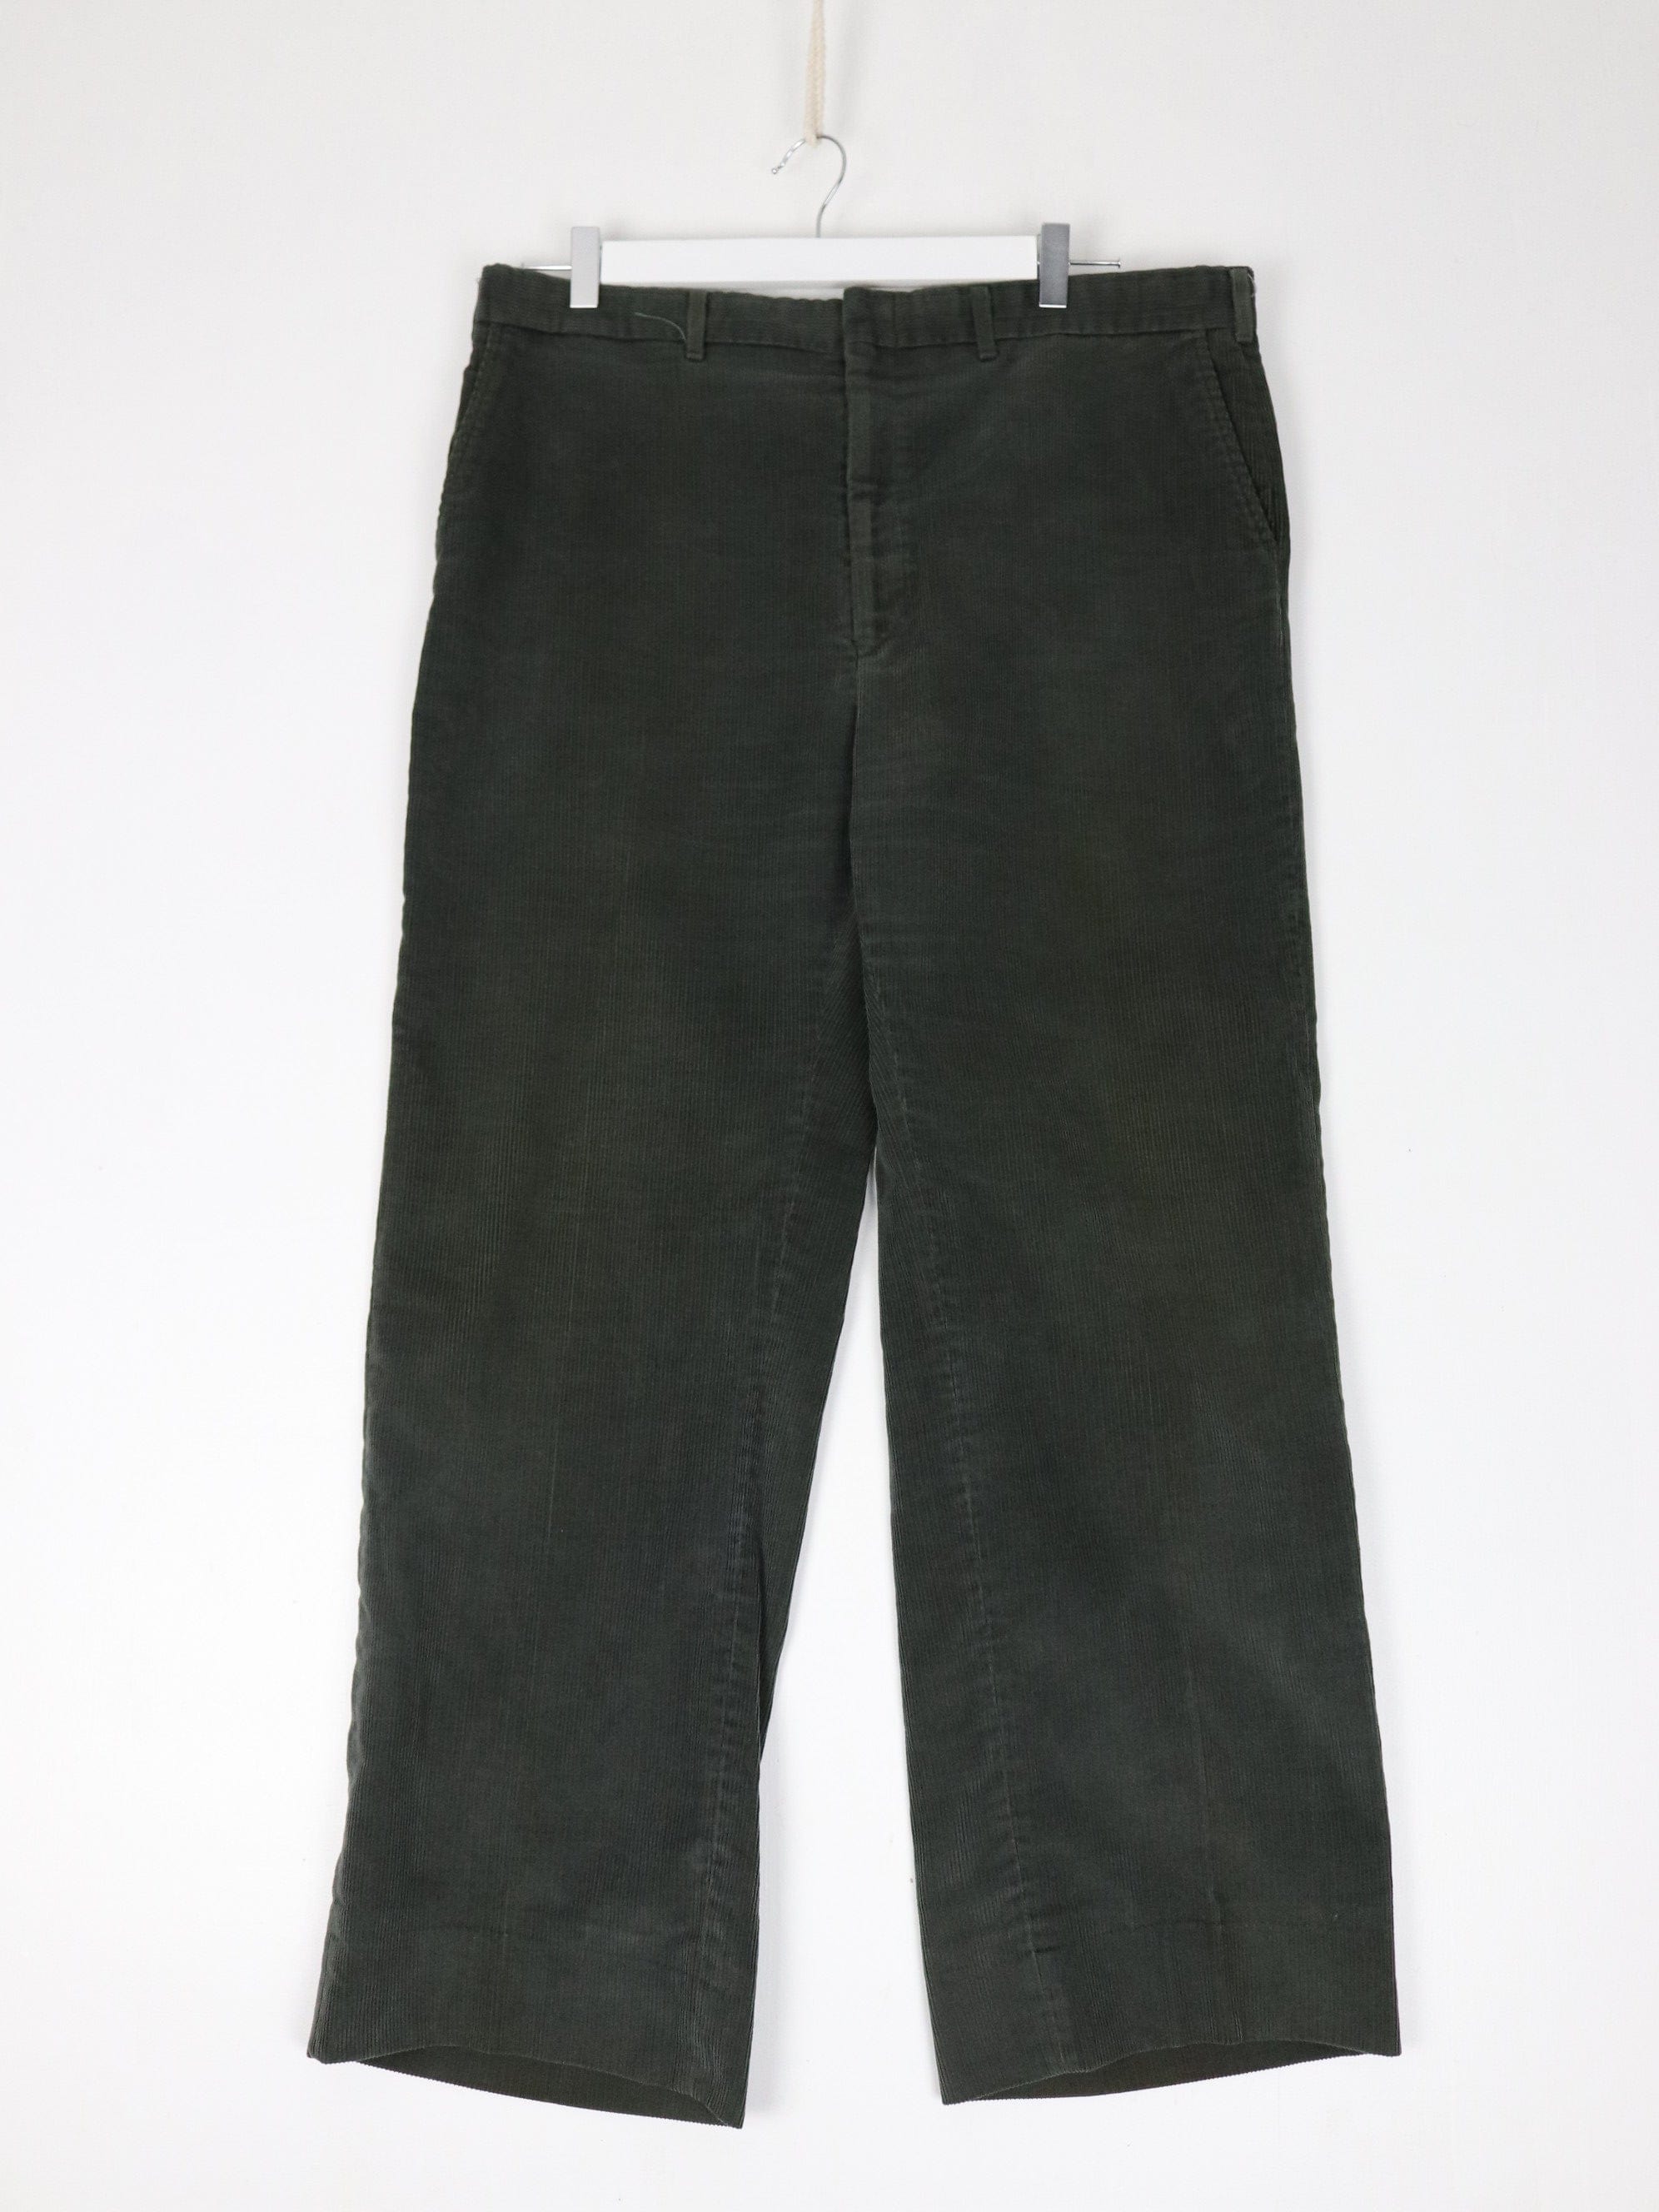 Vintage Haggar Pants Mens 37 x 28 Green Corduroy Trousers – Proper